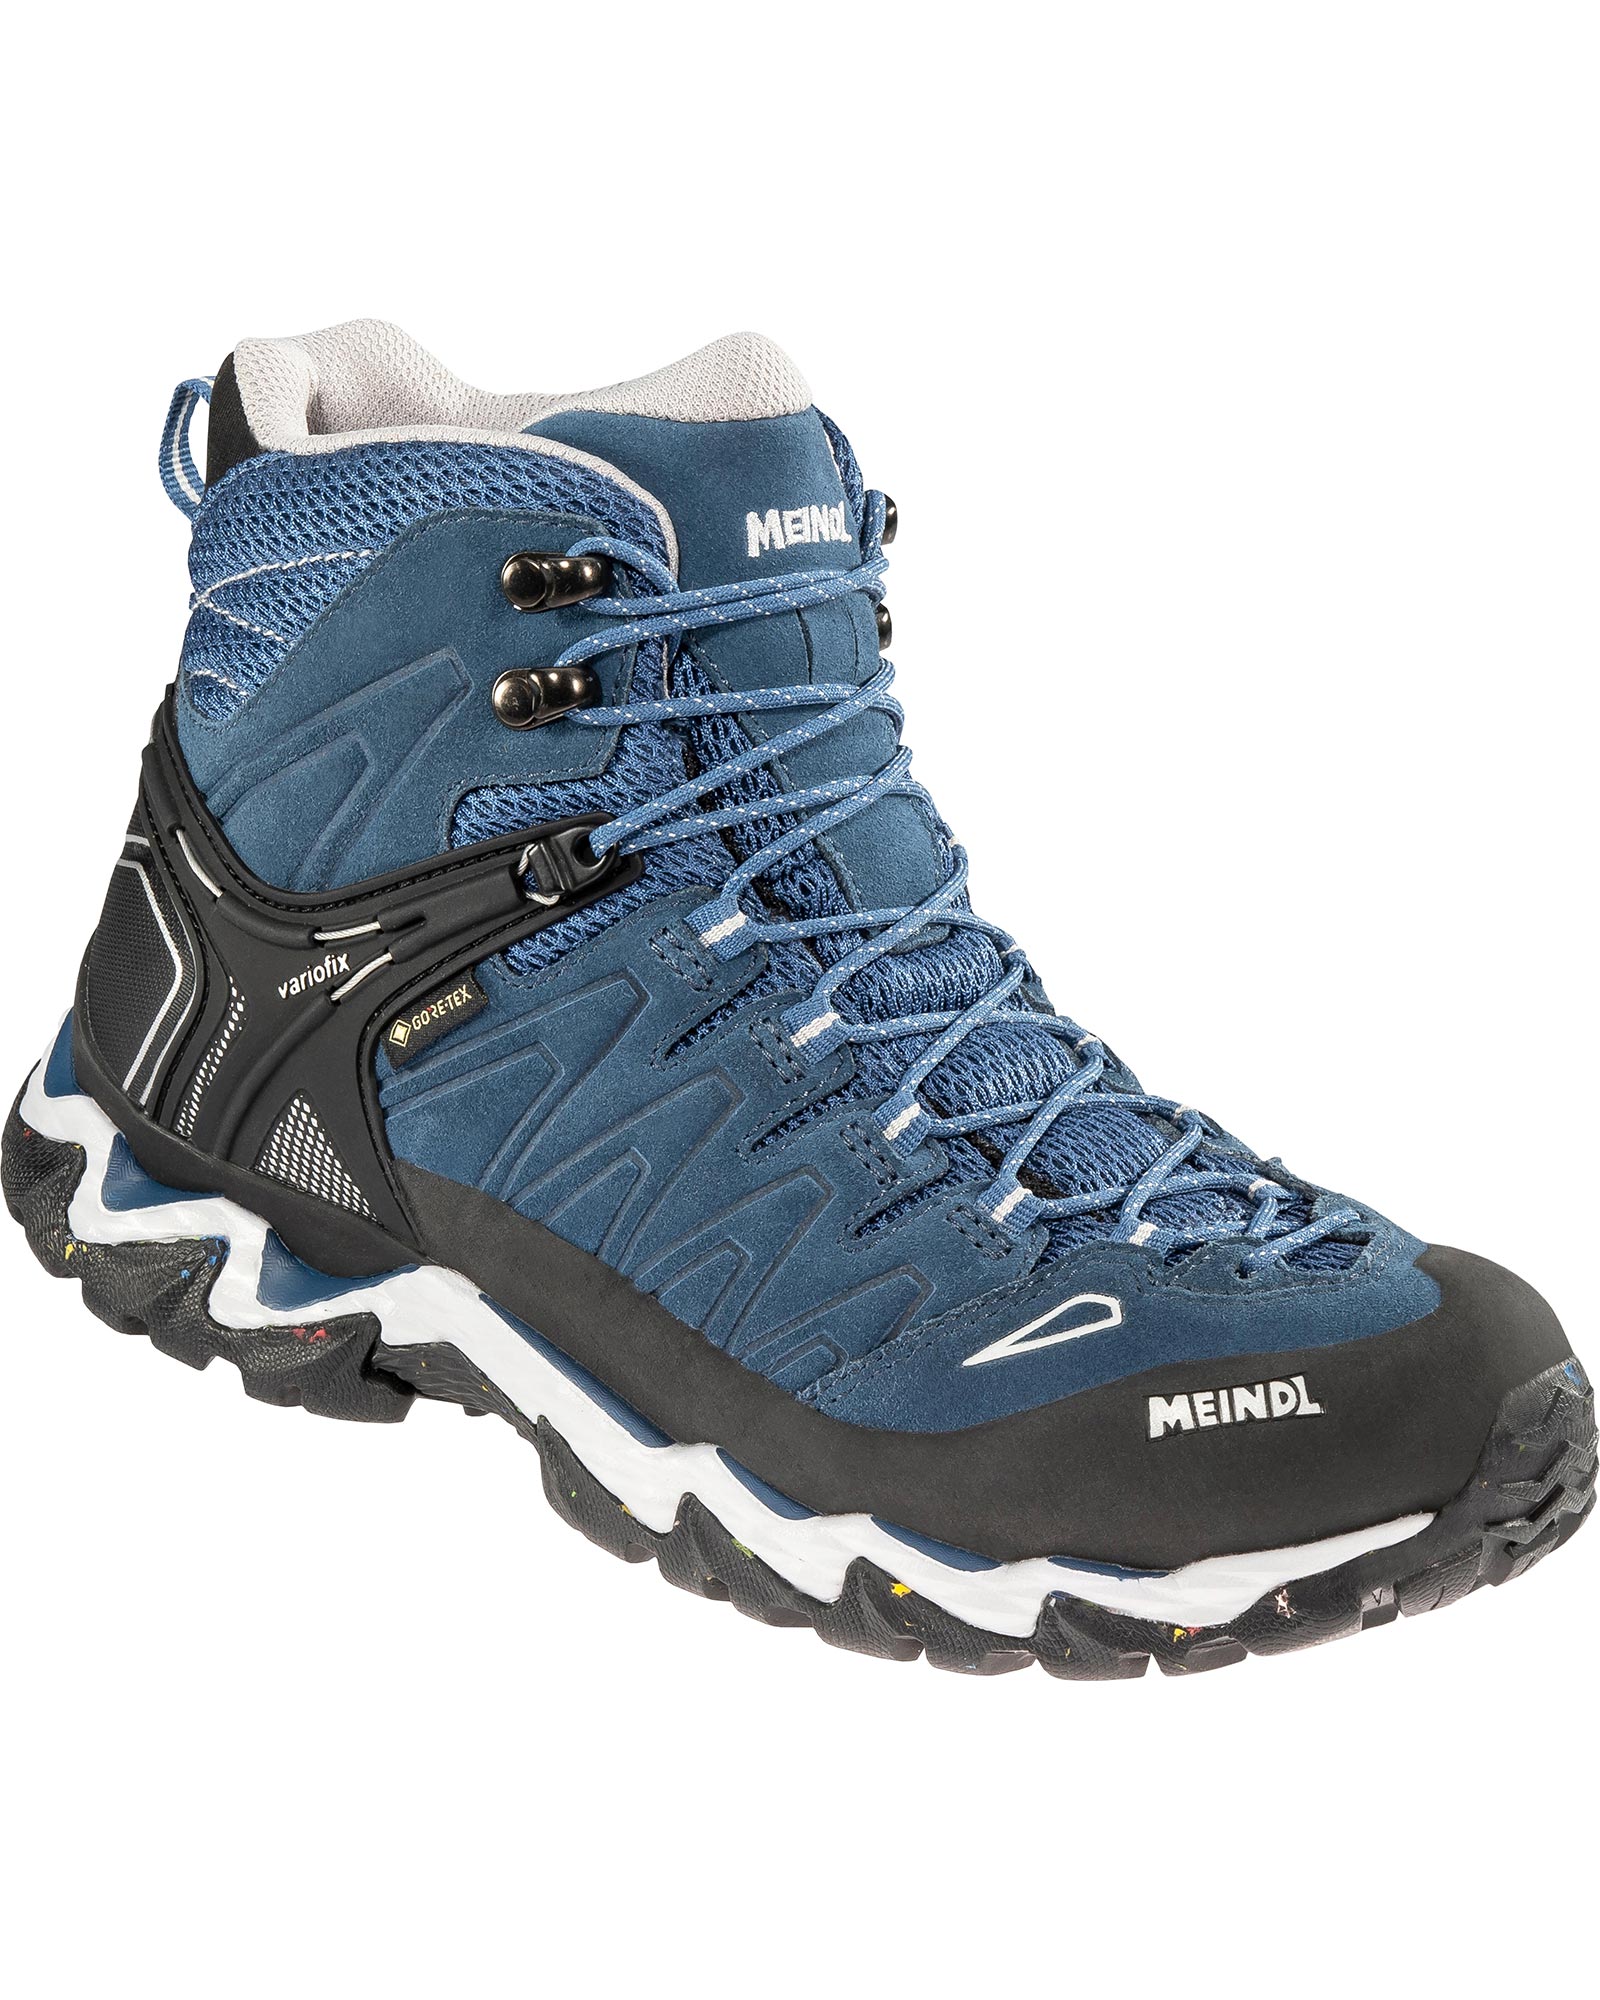 Meindl Lite Hike GORE TEX Women’s Boots - Blue/Light Blue UK 7